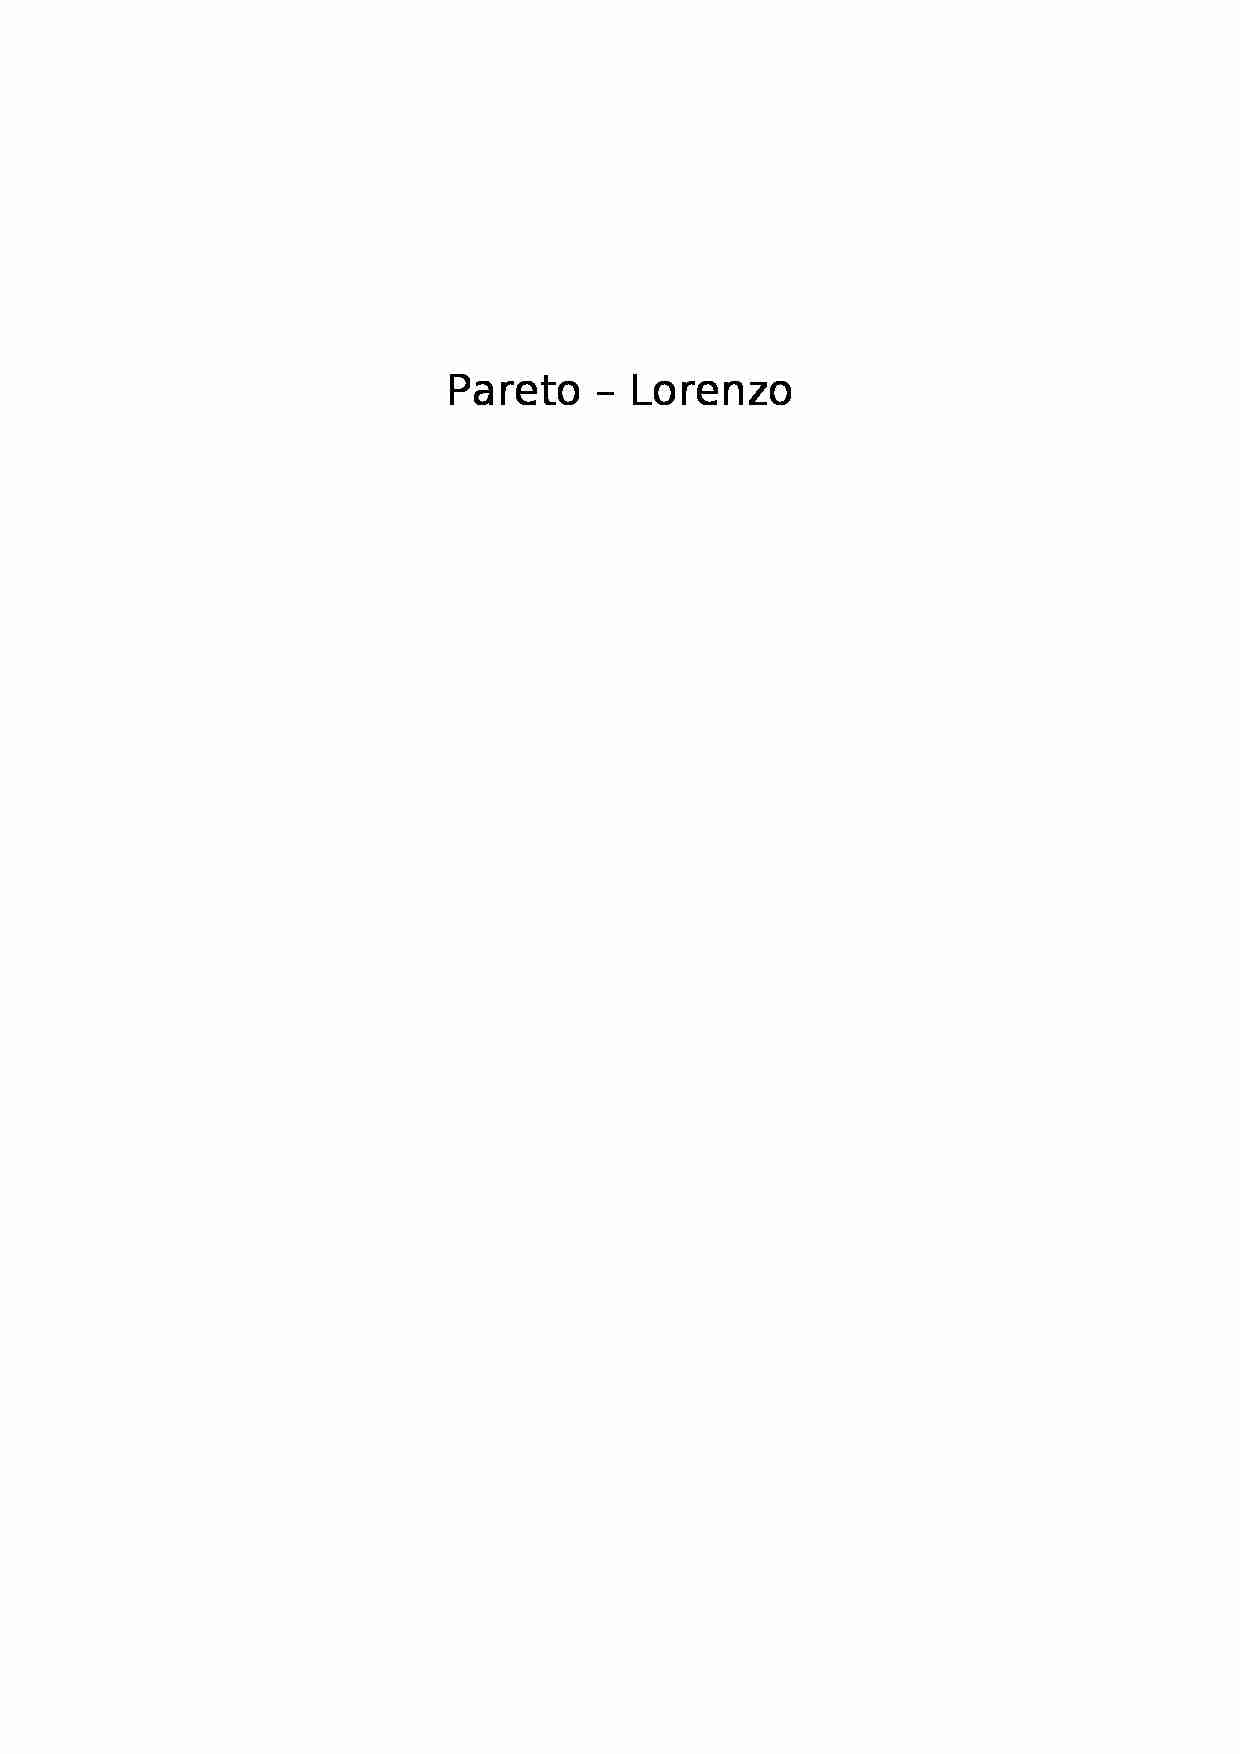 Pareto - Lorenzo, diagram - strona 1